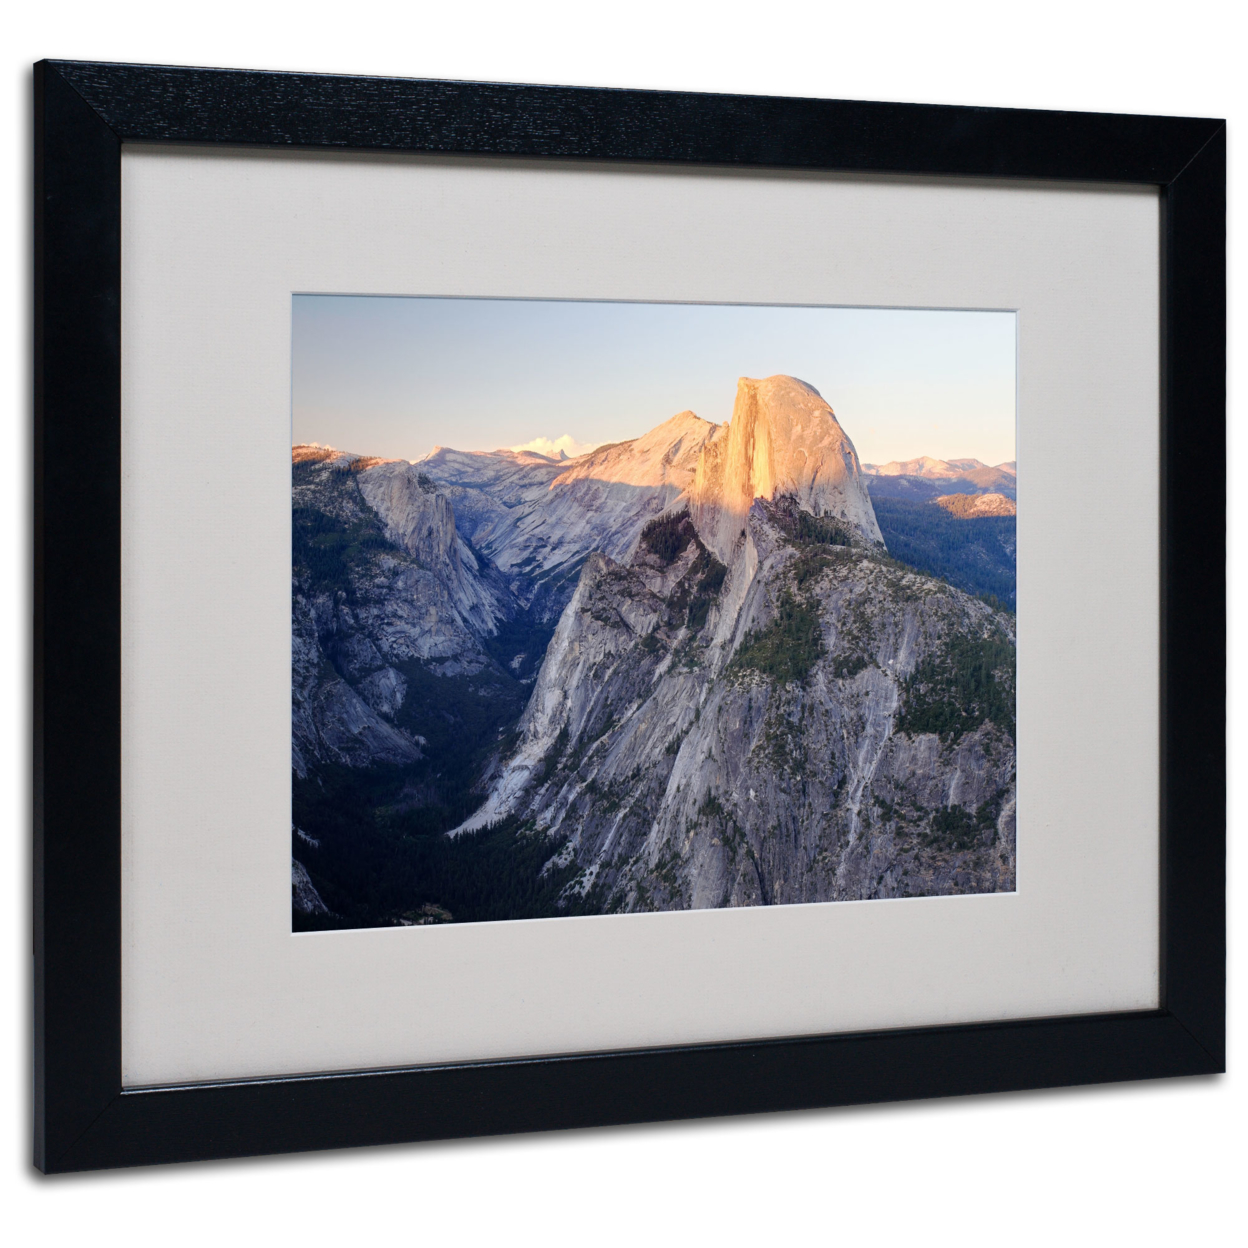 Pierre Leclerc 'Half Dome Yosemite' Black Wooden Framed Art 18 X 22 Inches